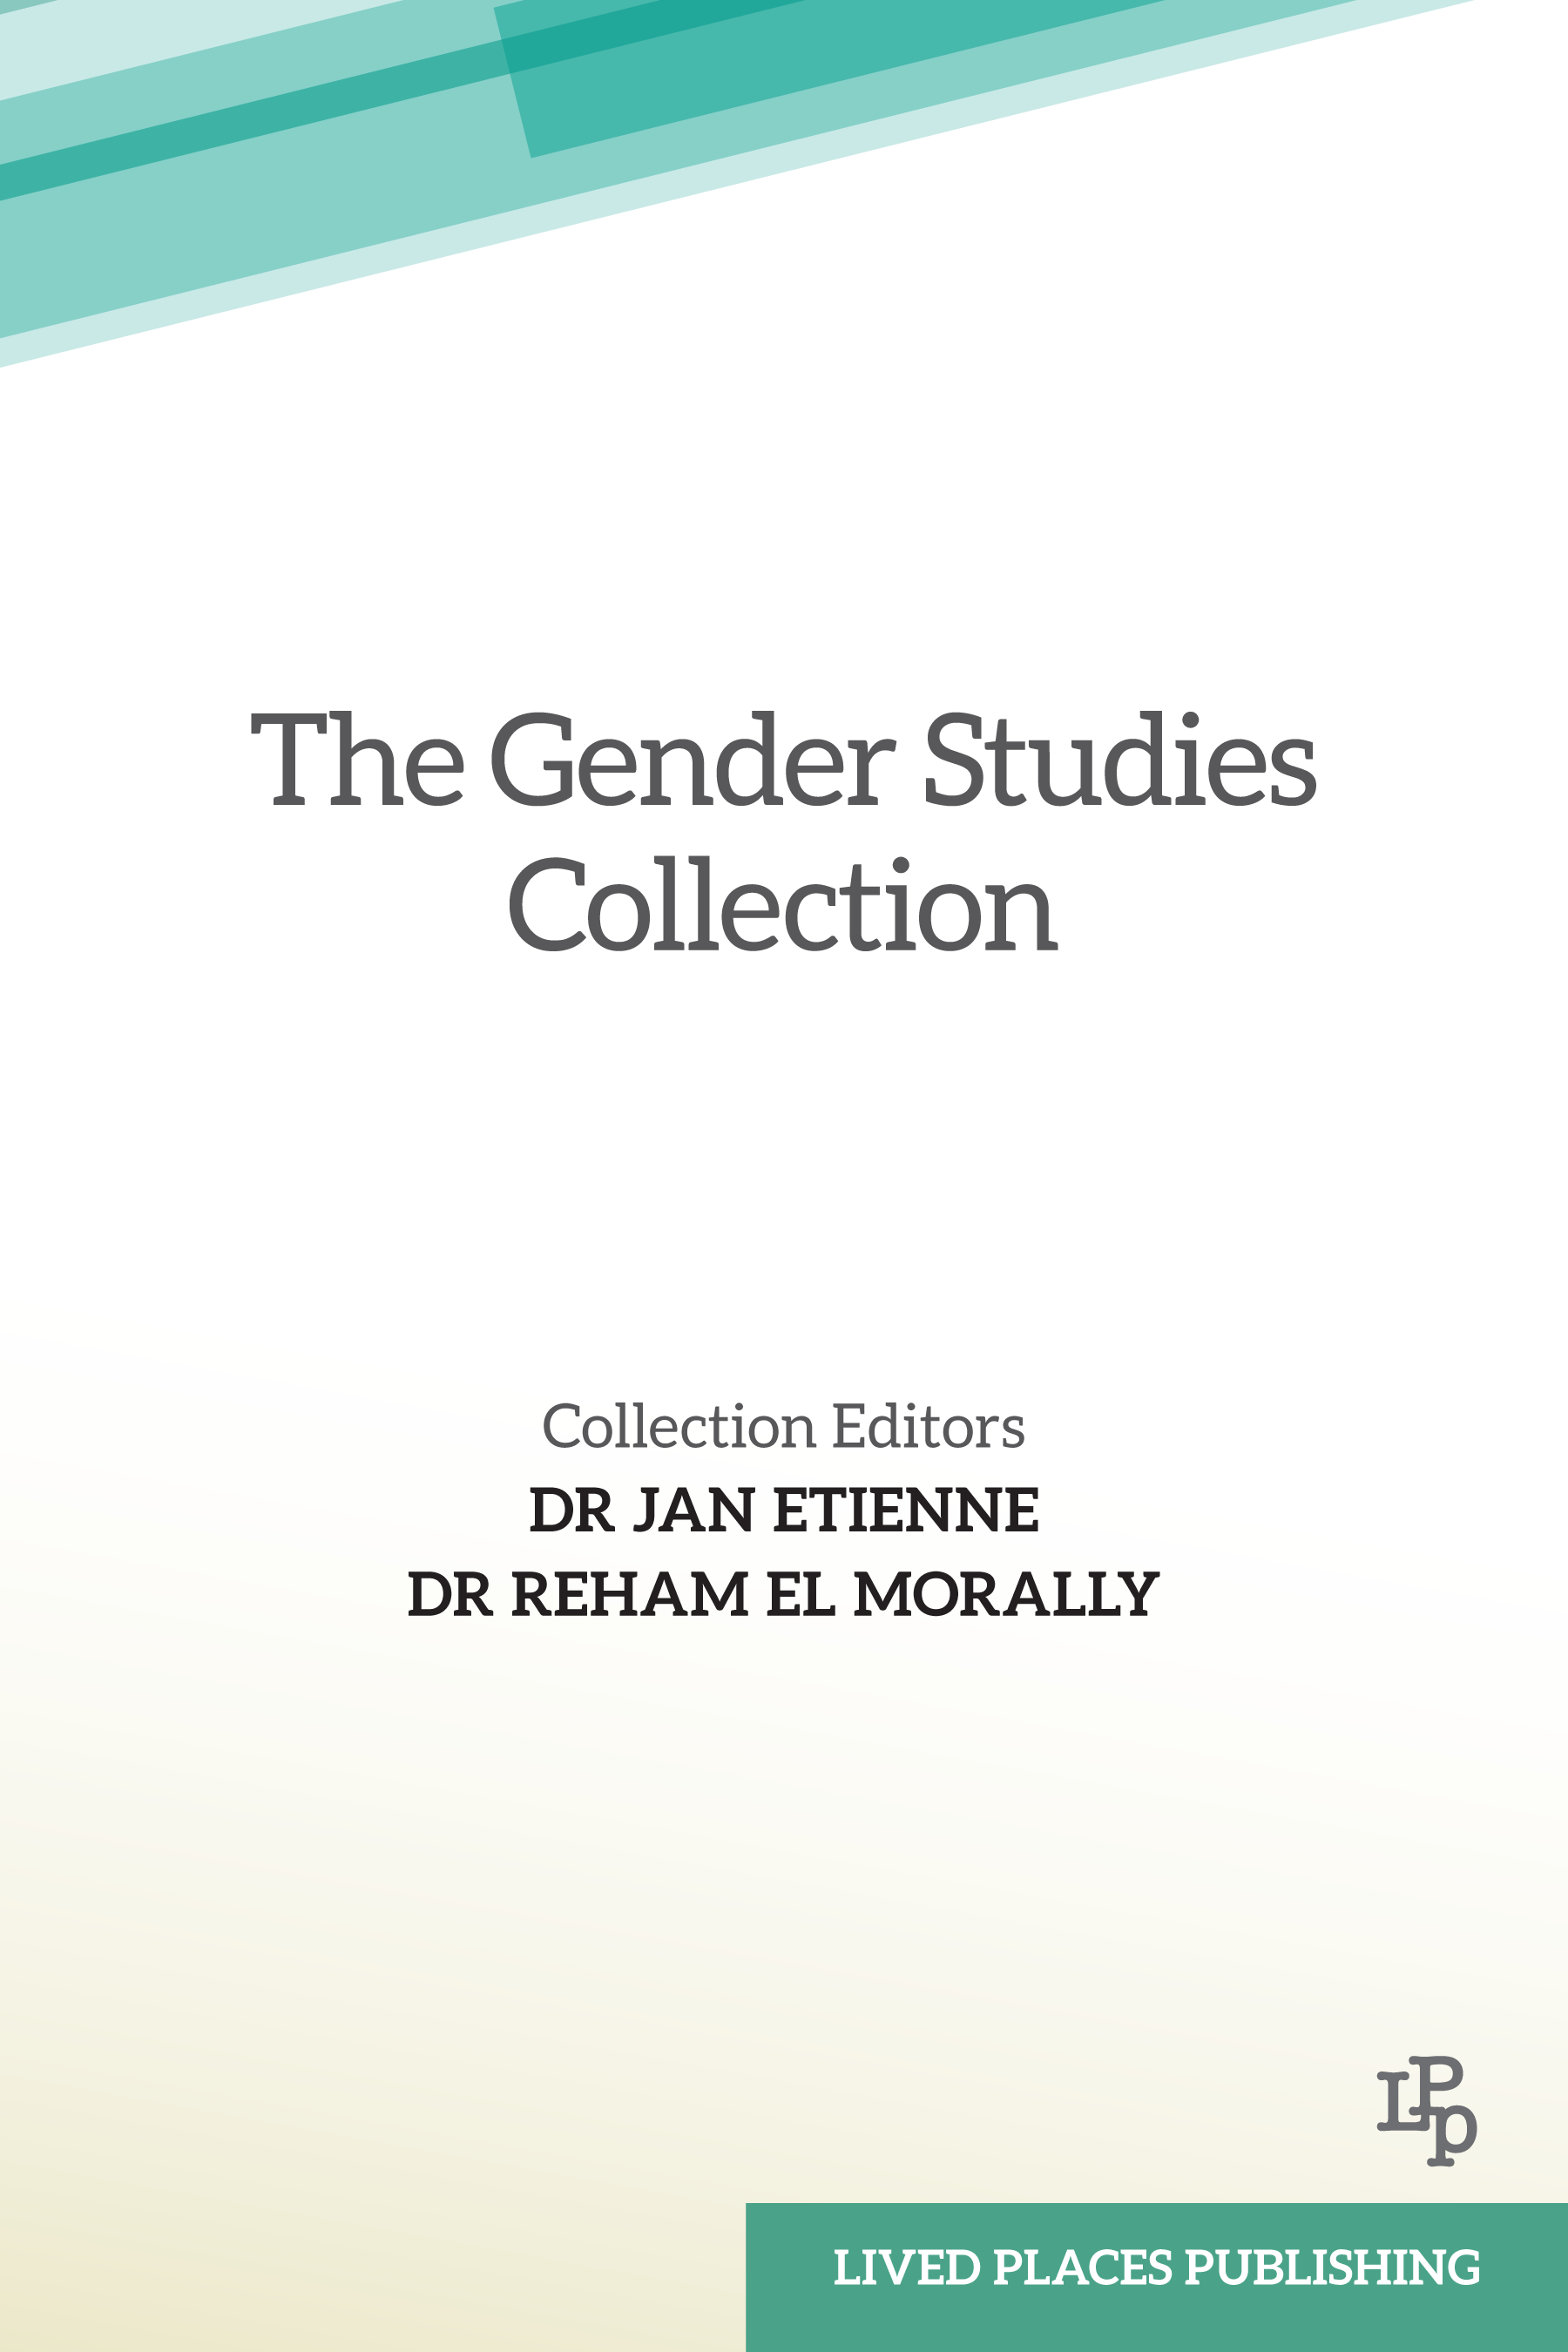 The Gender Studies Collection. Collection editors: Dr Jan Etienne & Dr Reham El Morally. Lived Places Publishing.